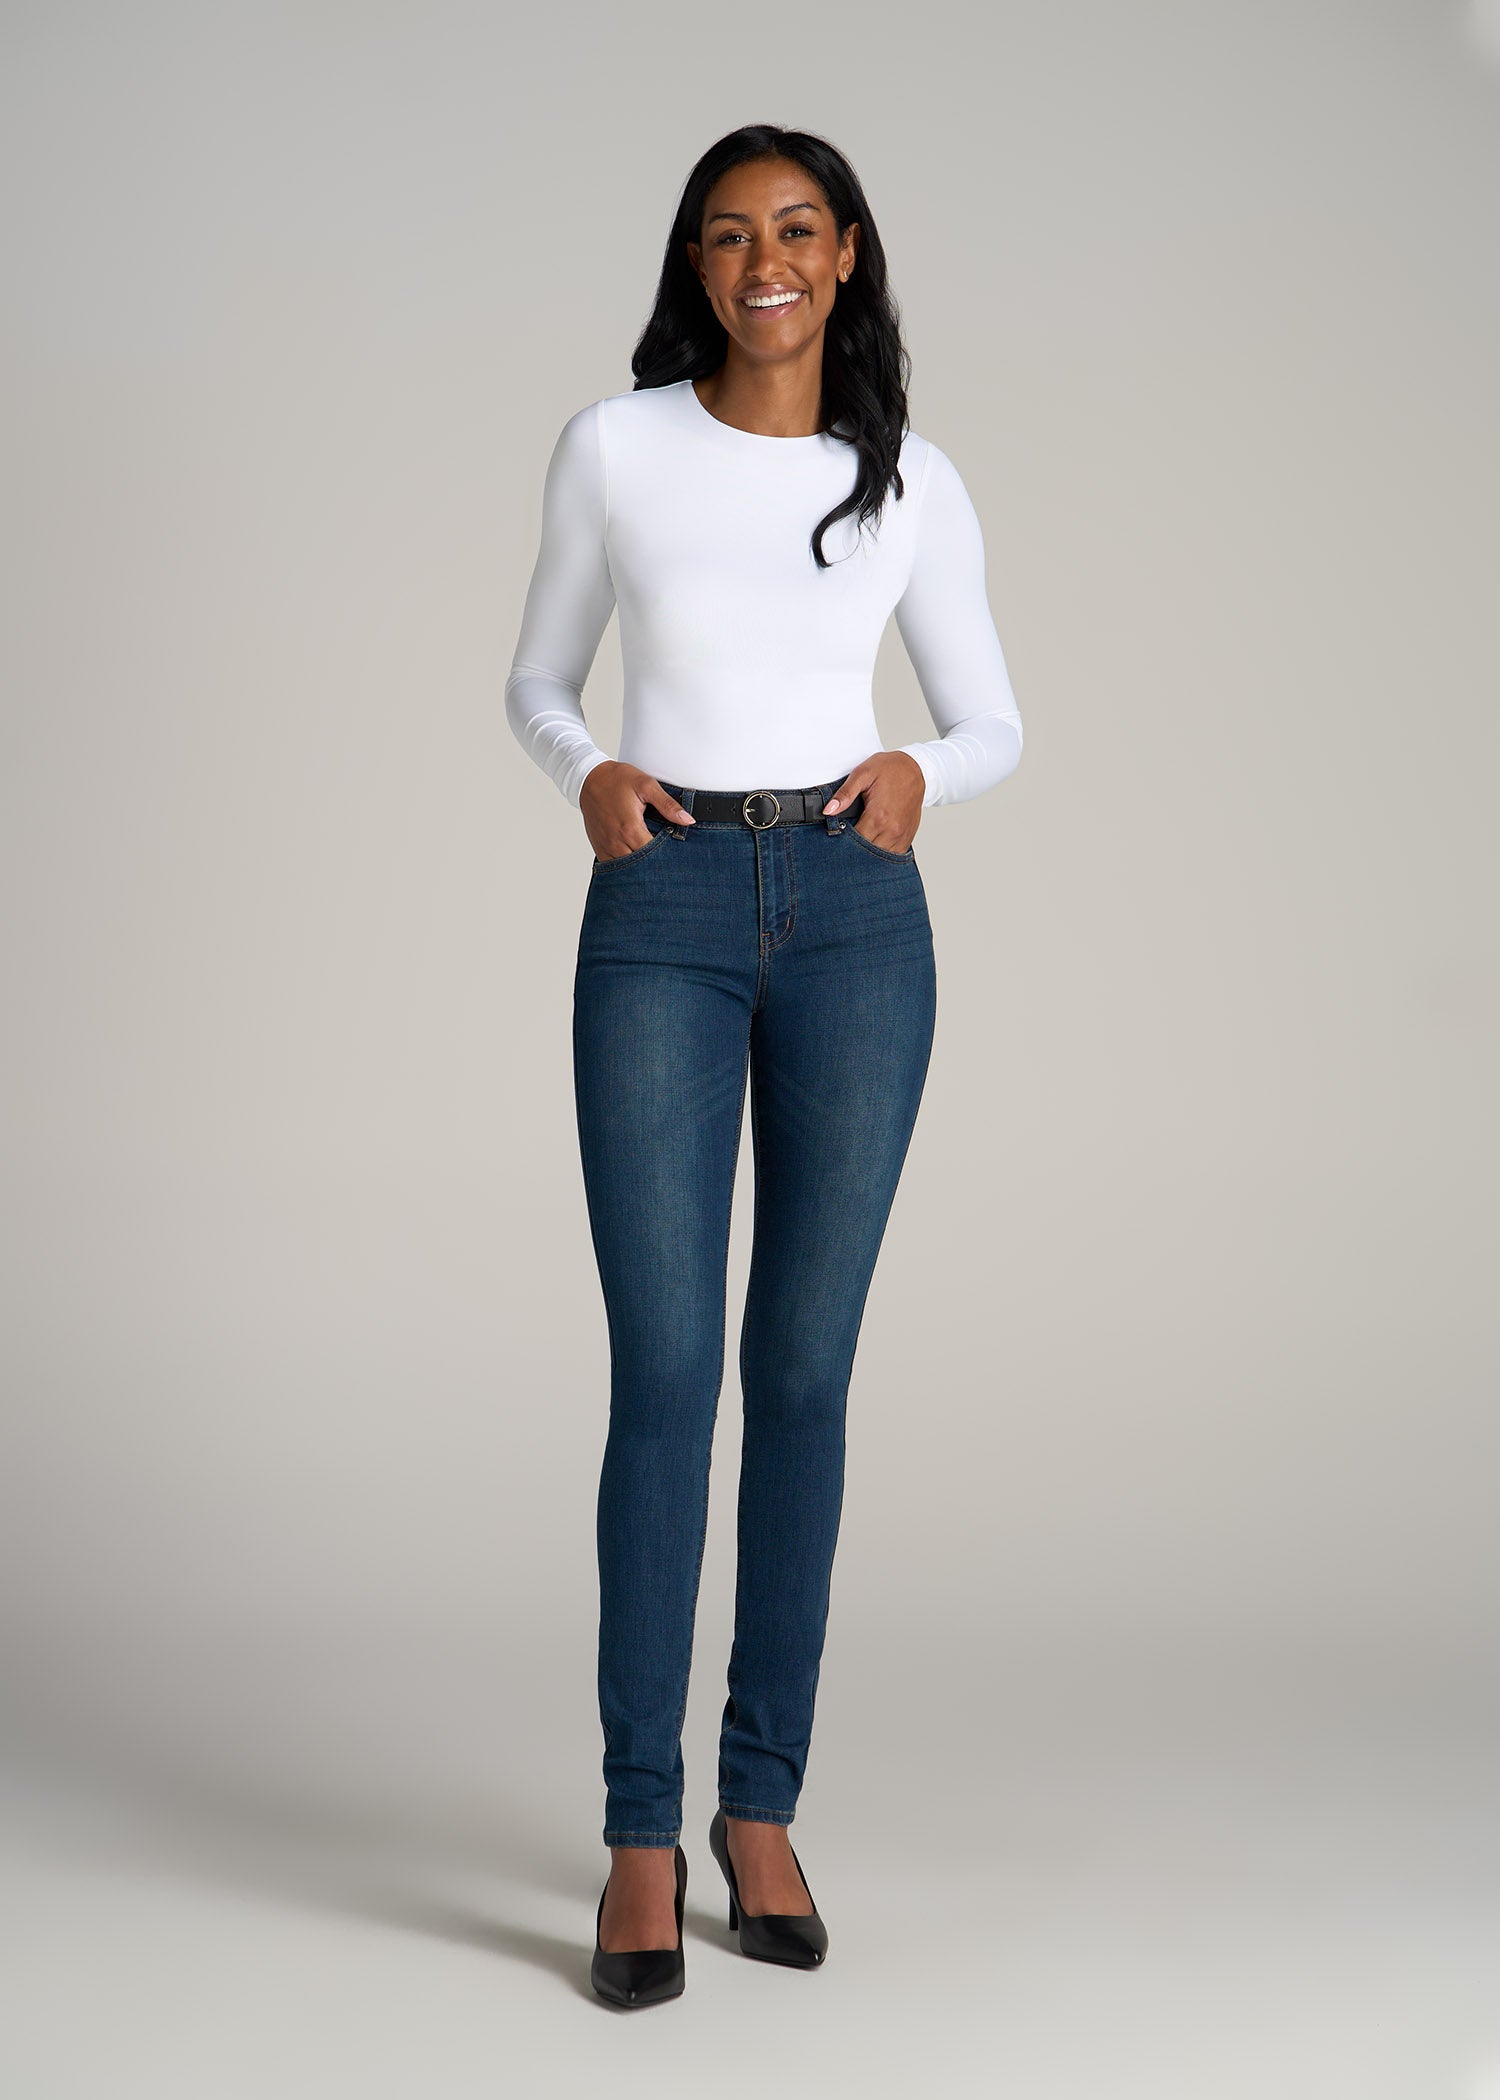 Mid Rise Jeans, Women's Mid Waist Jeans